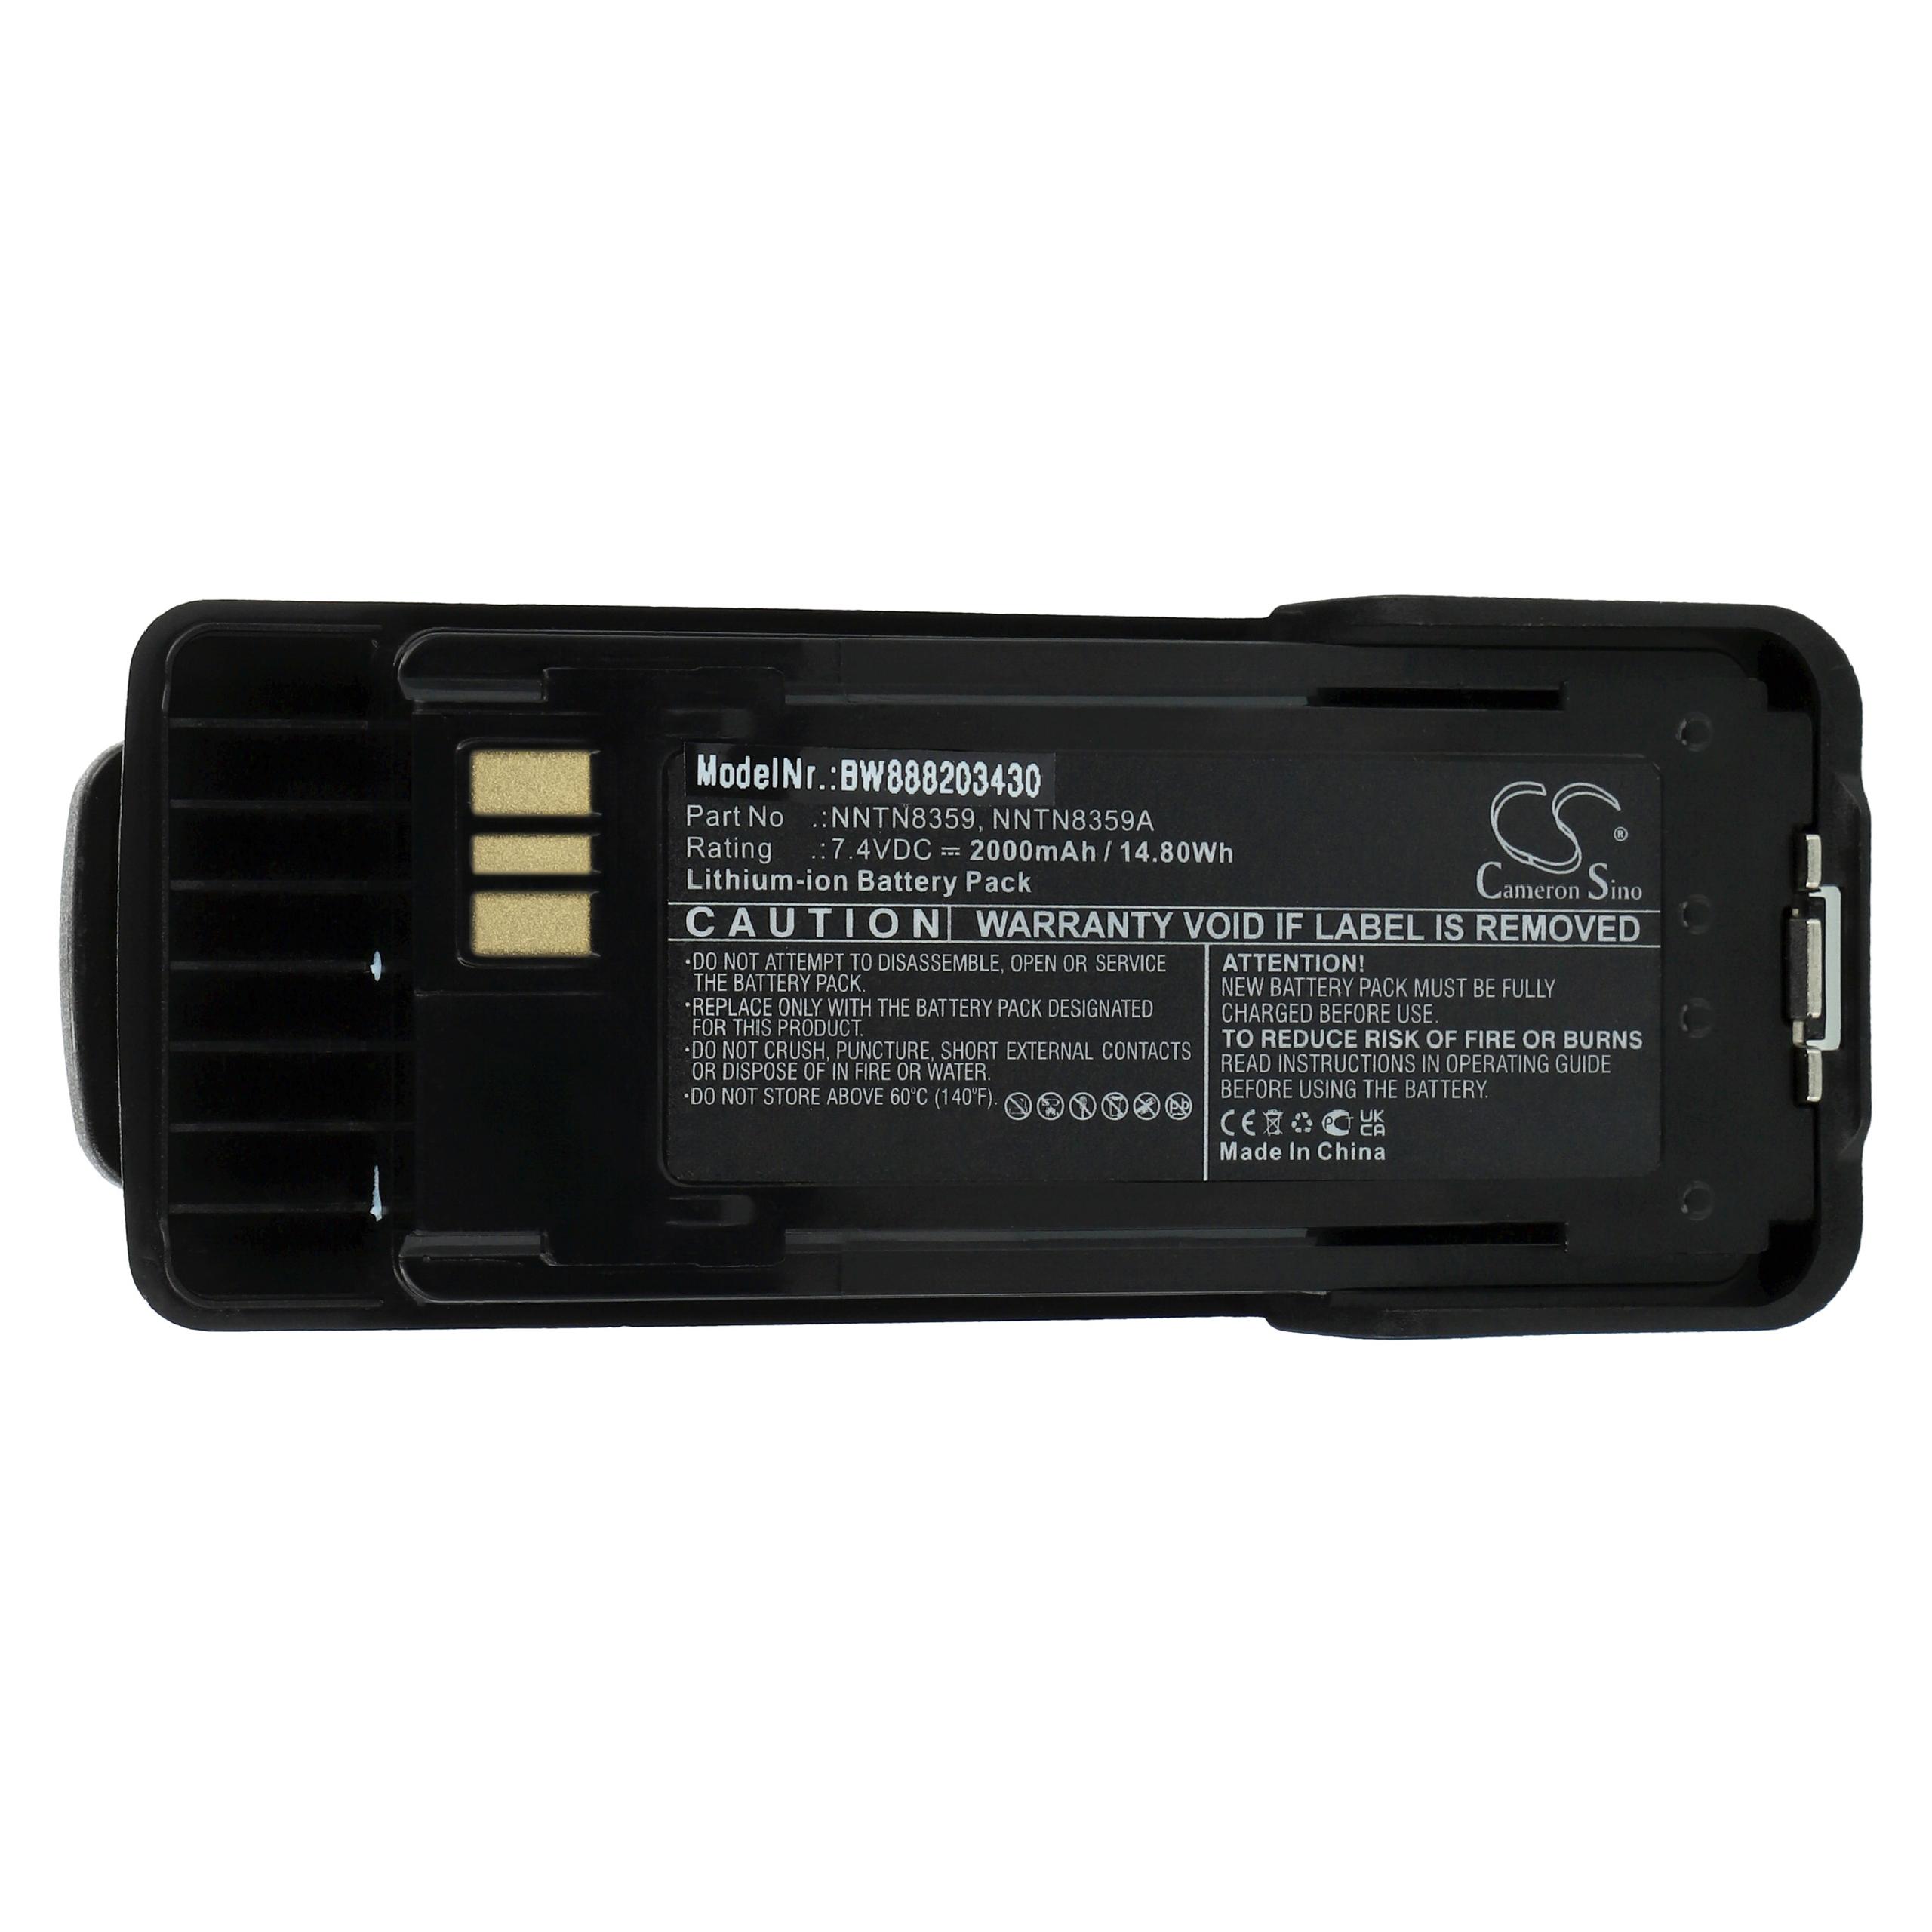 Akumulator do radiotelefonu zamiennik Motorola NNTN8359A, NNTN8359 - 2000 mAh 7,4 V Li-Ion + klips na pasek